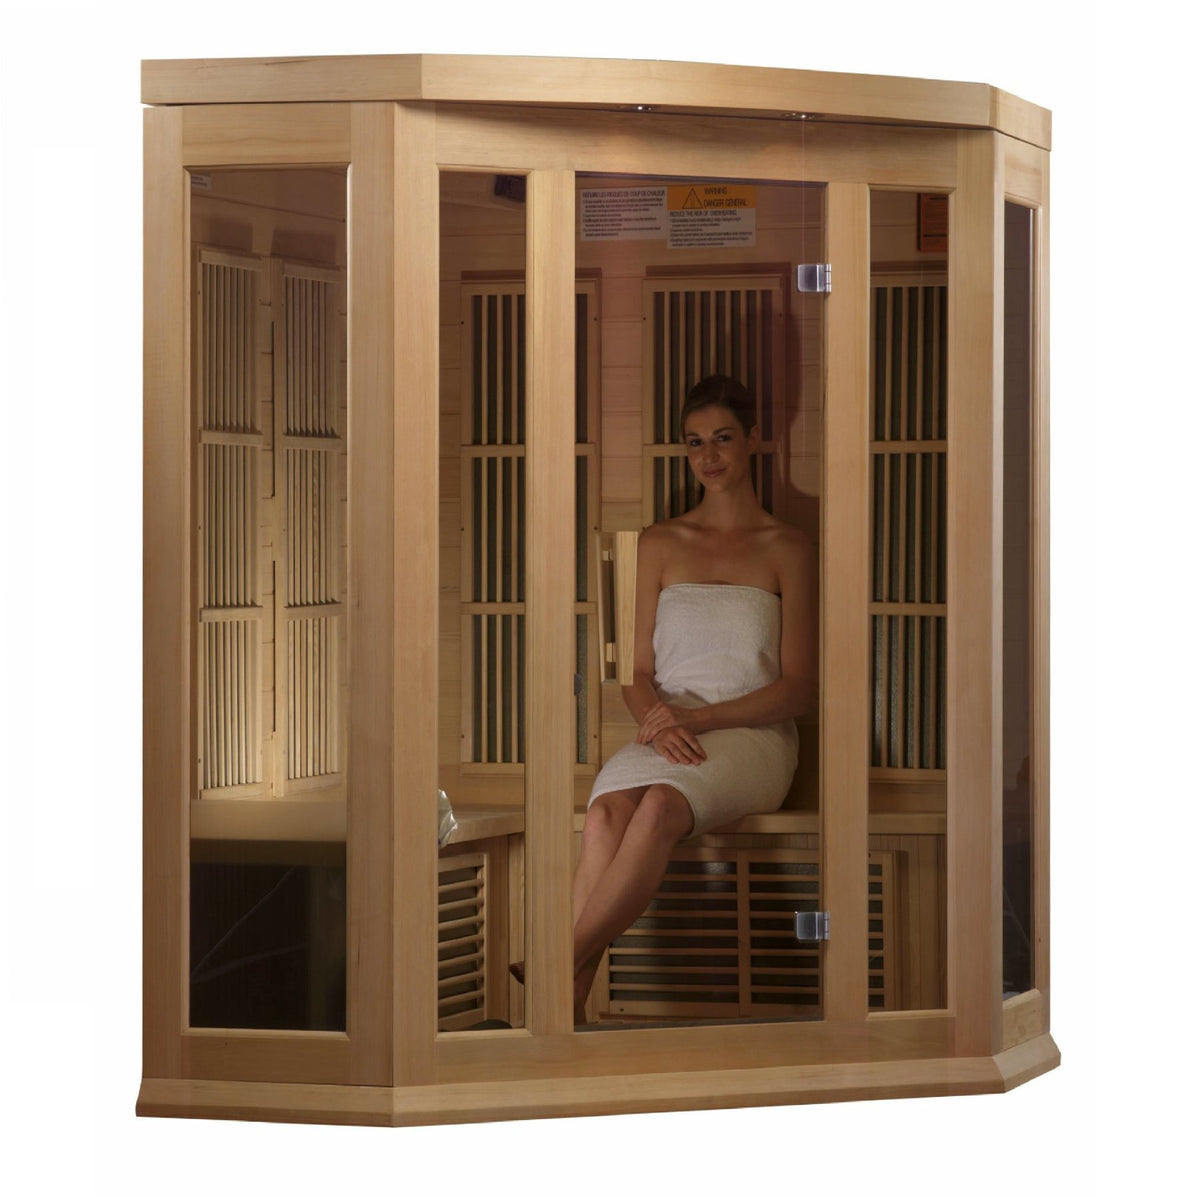 Maxxus 3 Person Corner Low EMF Infrared Sauna / Code "calmspas30" for $30 Off / IN STOCK